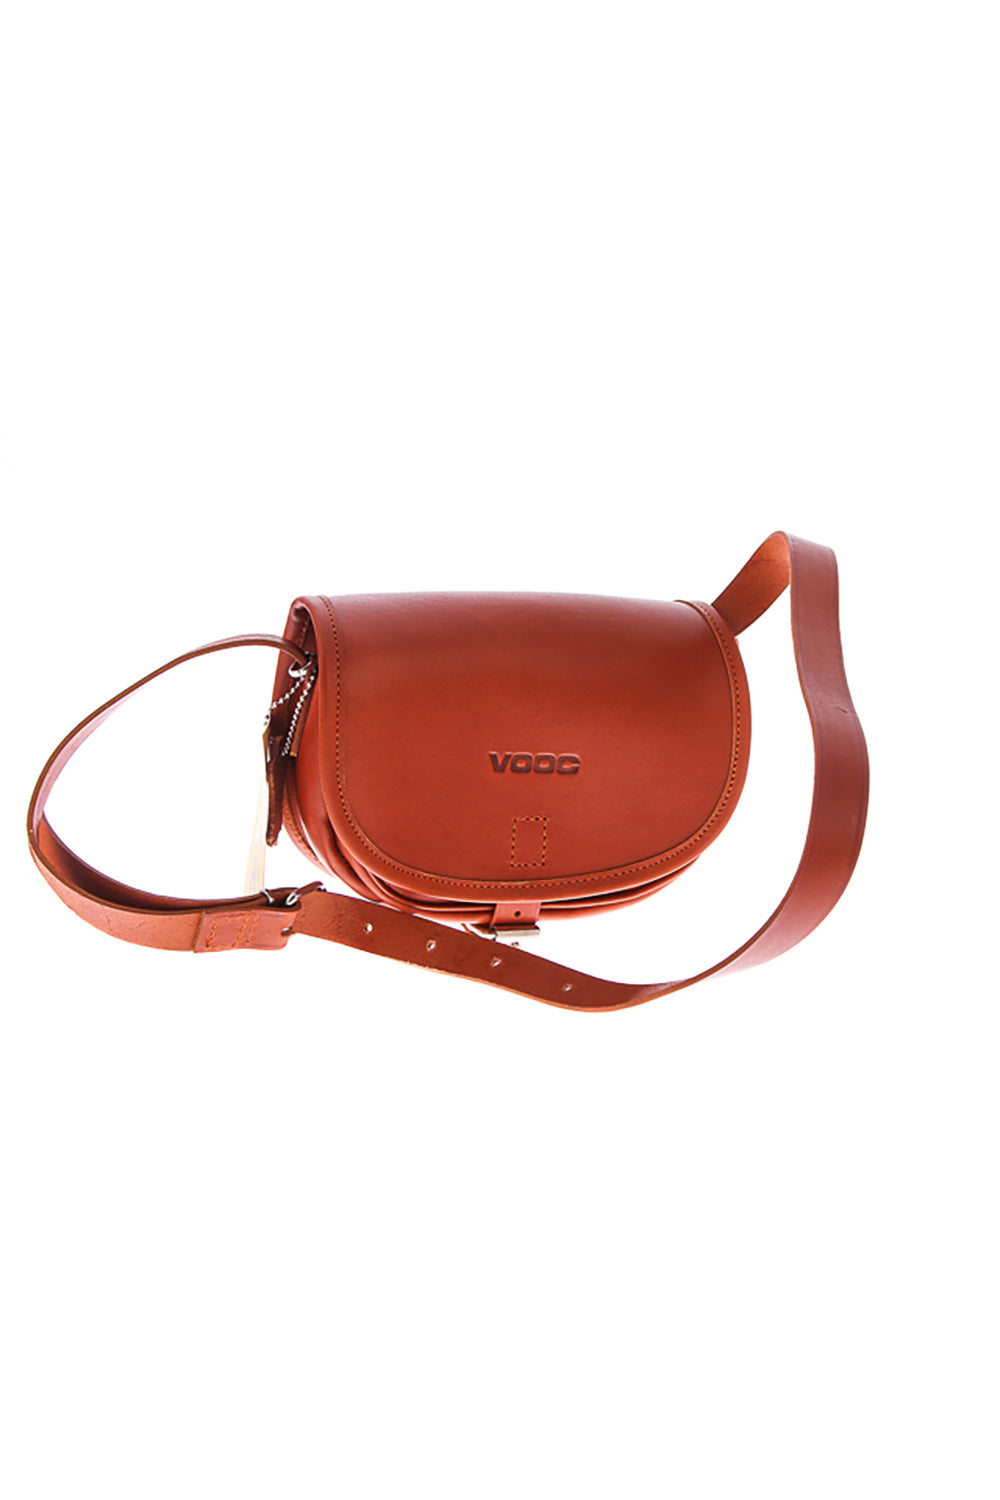 Natural leather bag model 152154 Verosoft Posh Styles Apparel